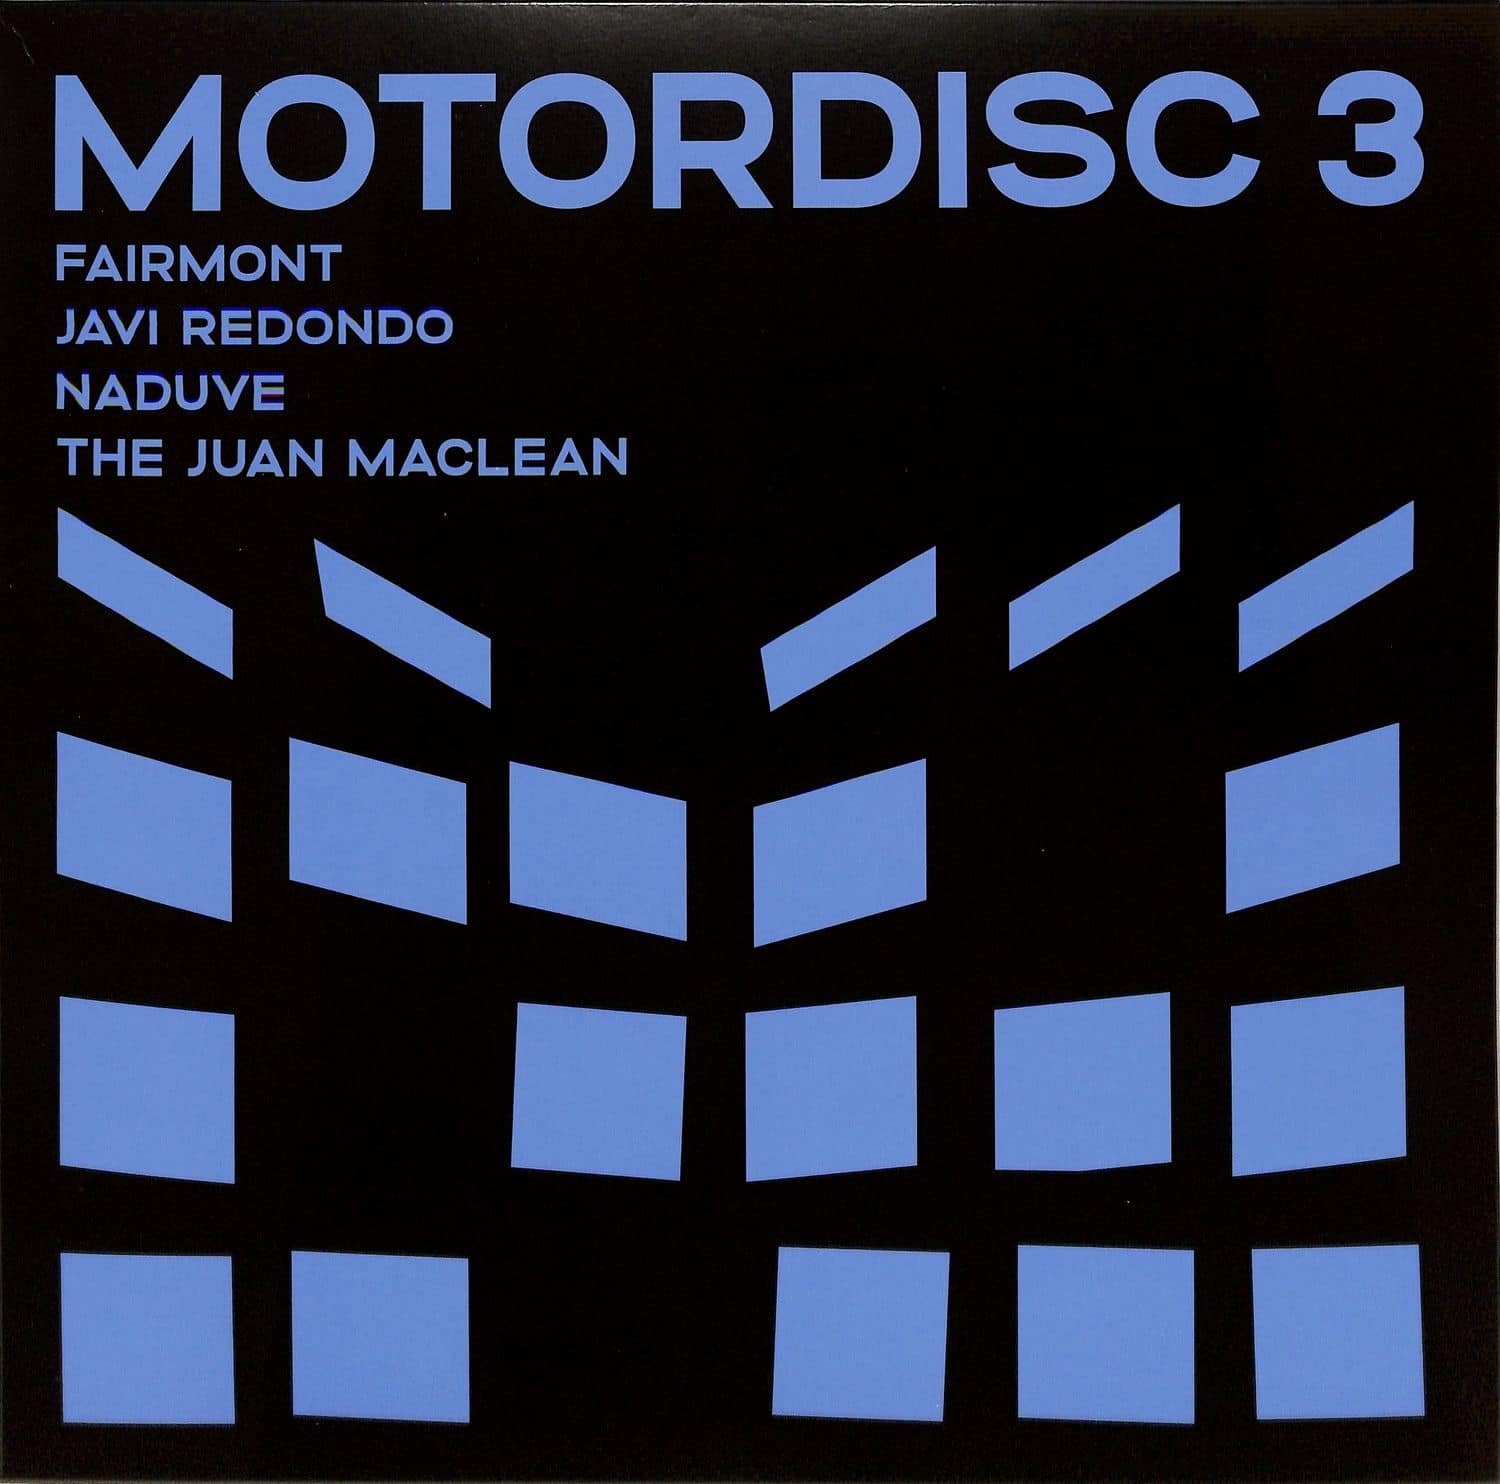 The Juan MacLean, Javi Redondo, Naduve, Fairmont - MOTORDISC 3